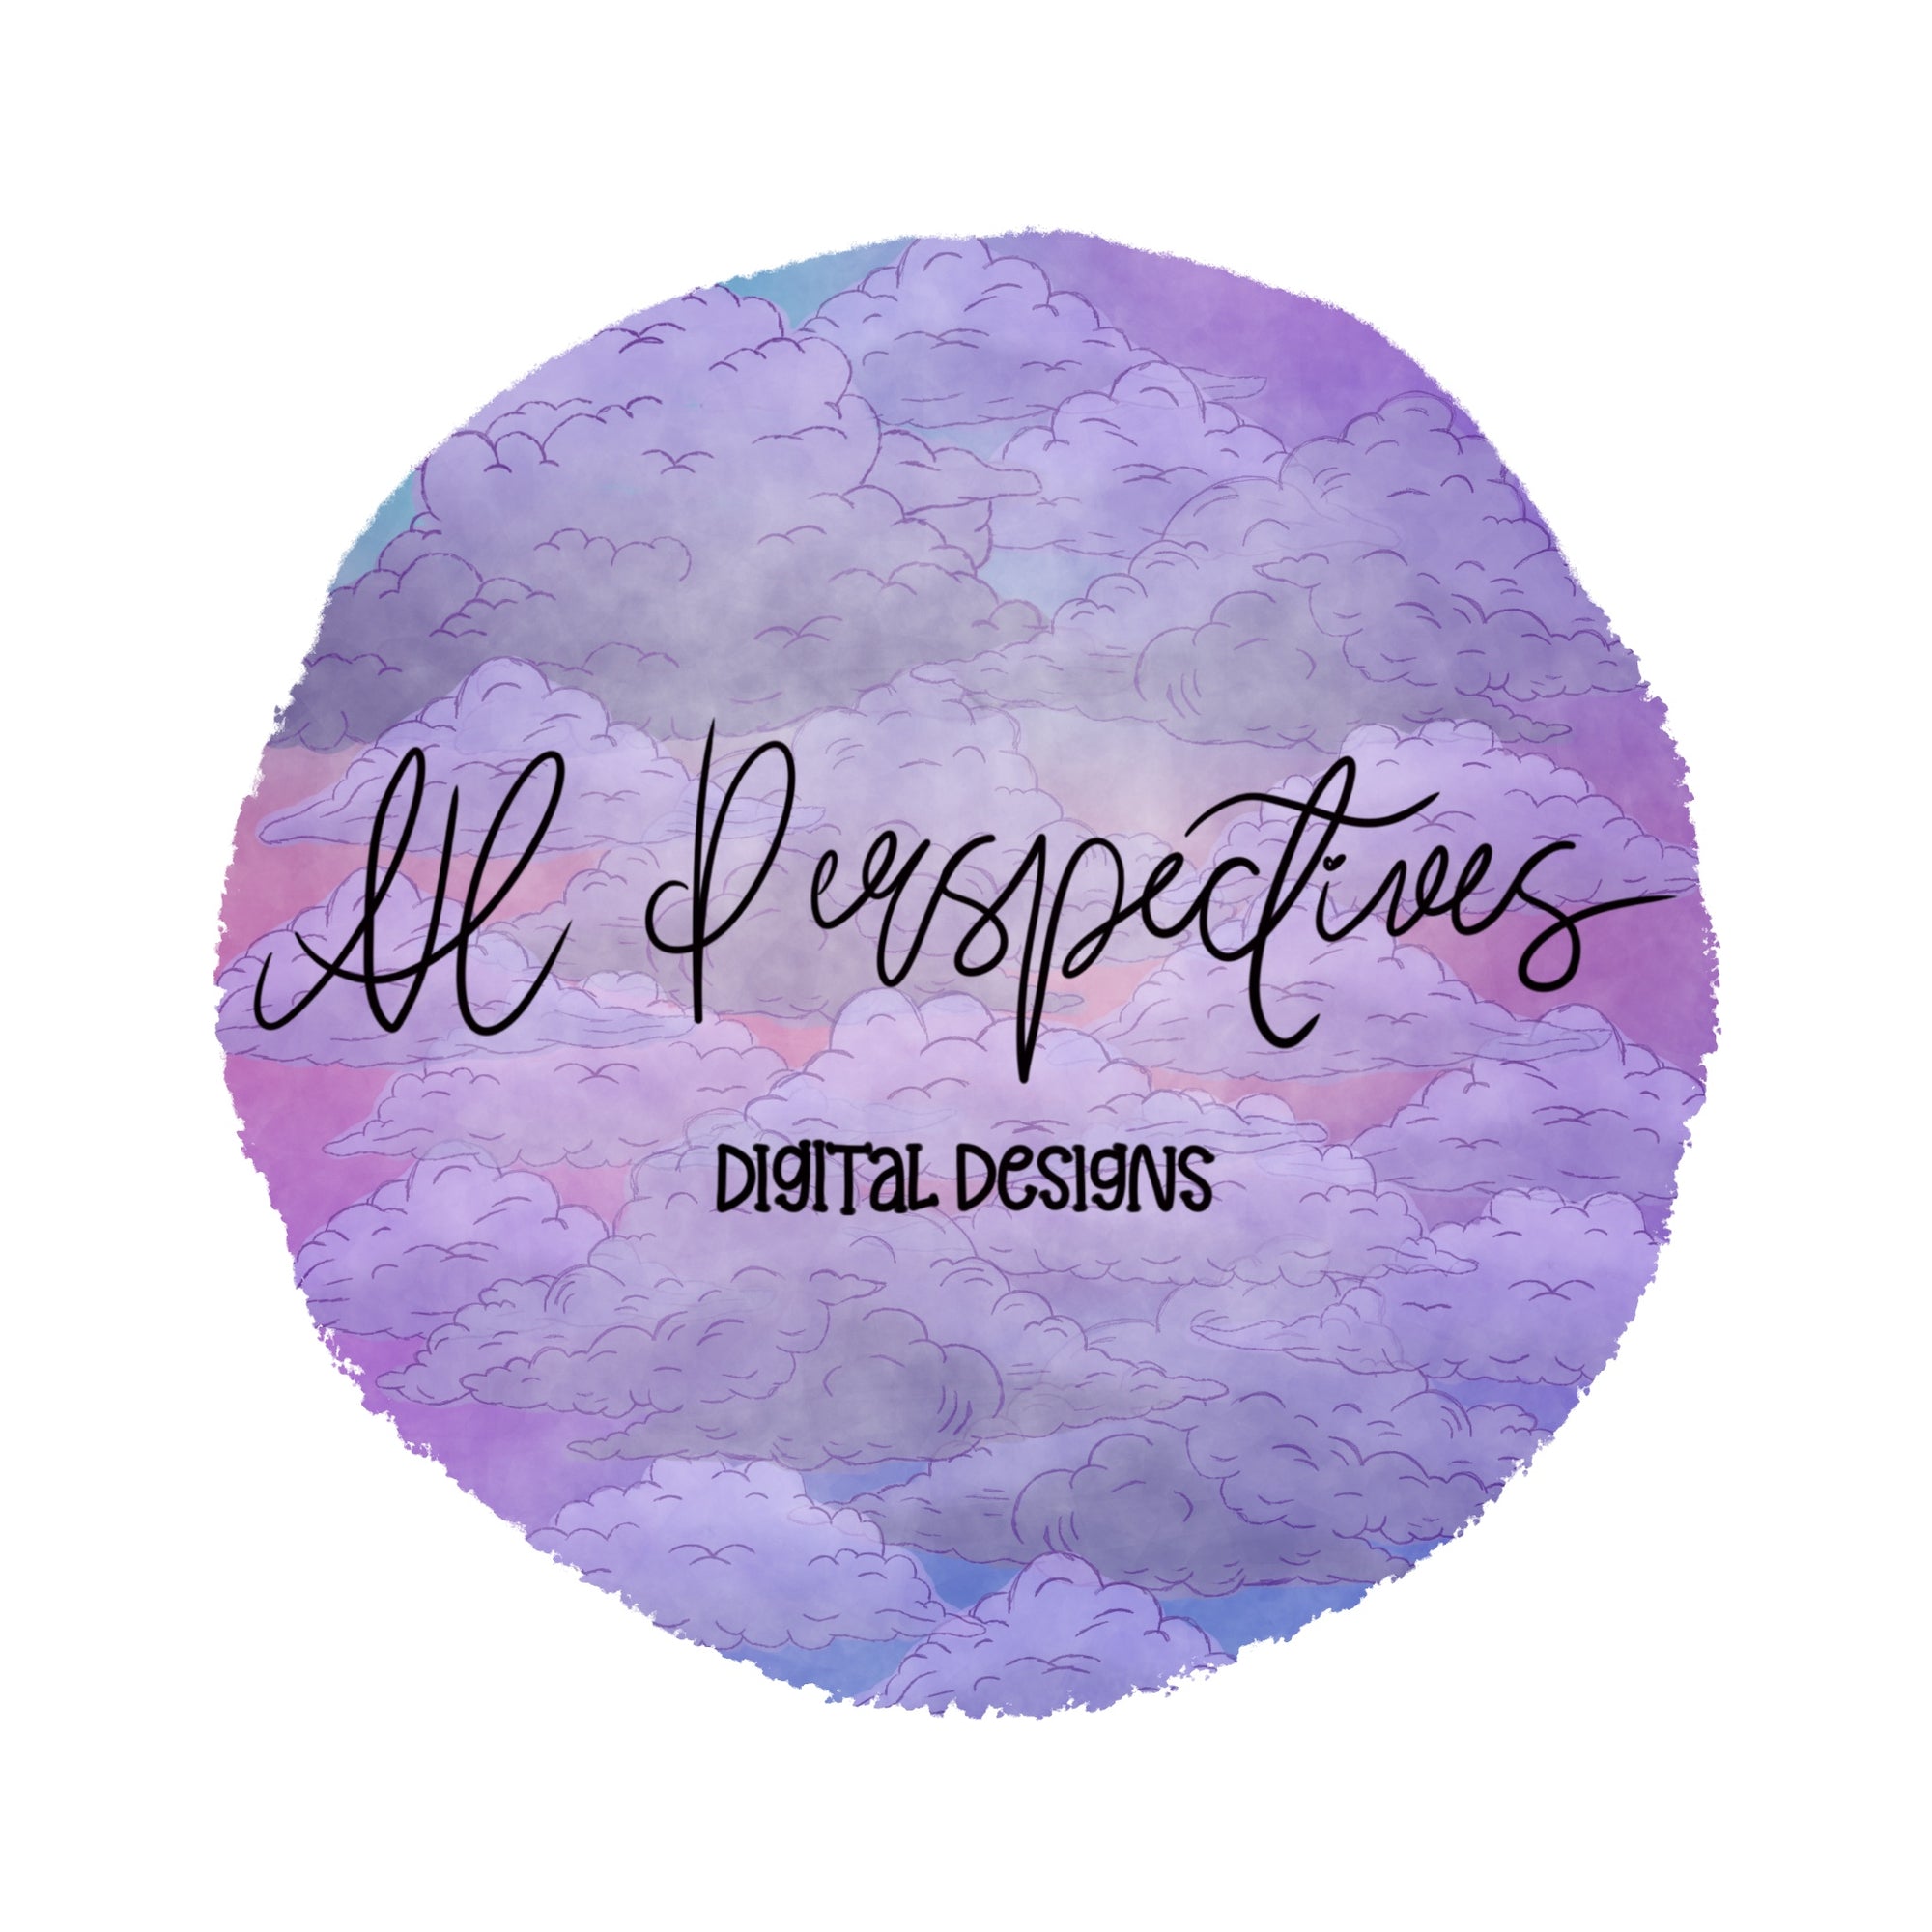 Designs by AH Perspectives Digital Designs